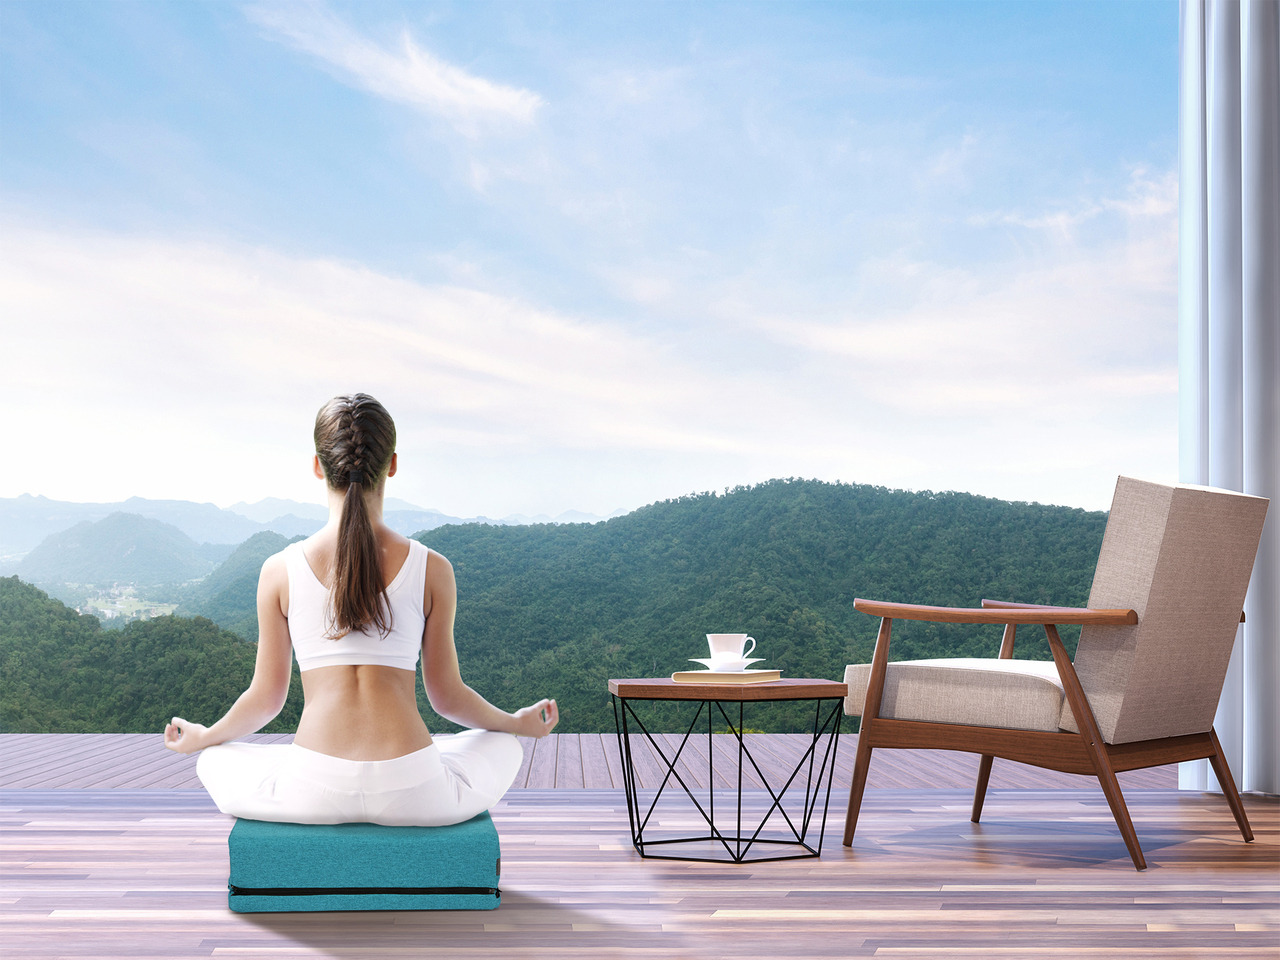 Meditation Cushion-Meditation Chair-Meditation Seat-Meditation Pillow-Meditation Bench-Meditation Stool